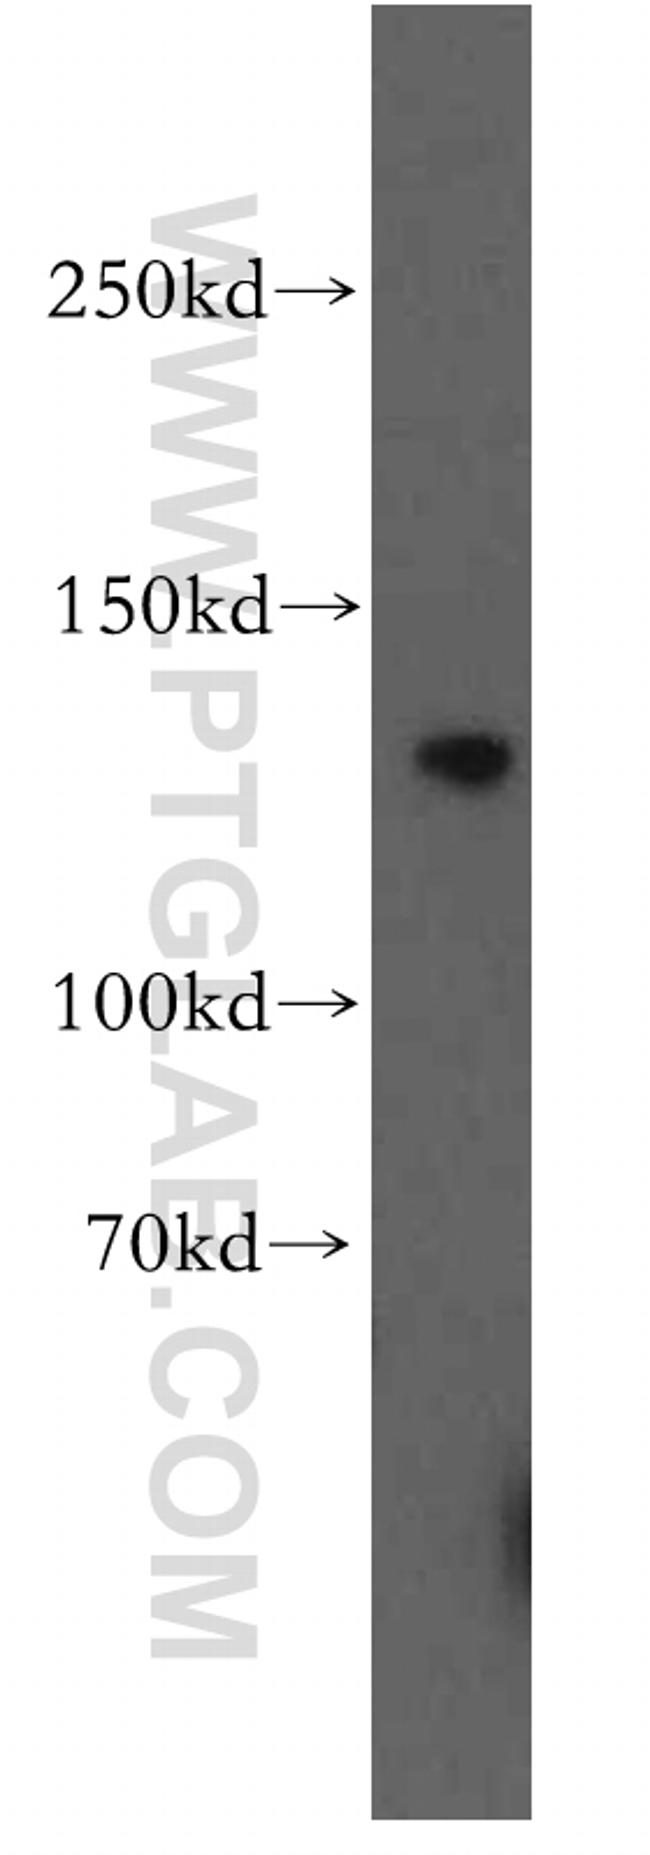 TRPC1 Antibody in Western Blot (WB)